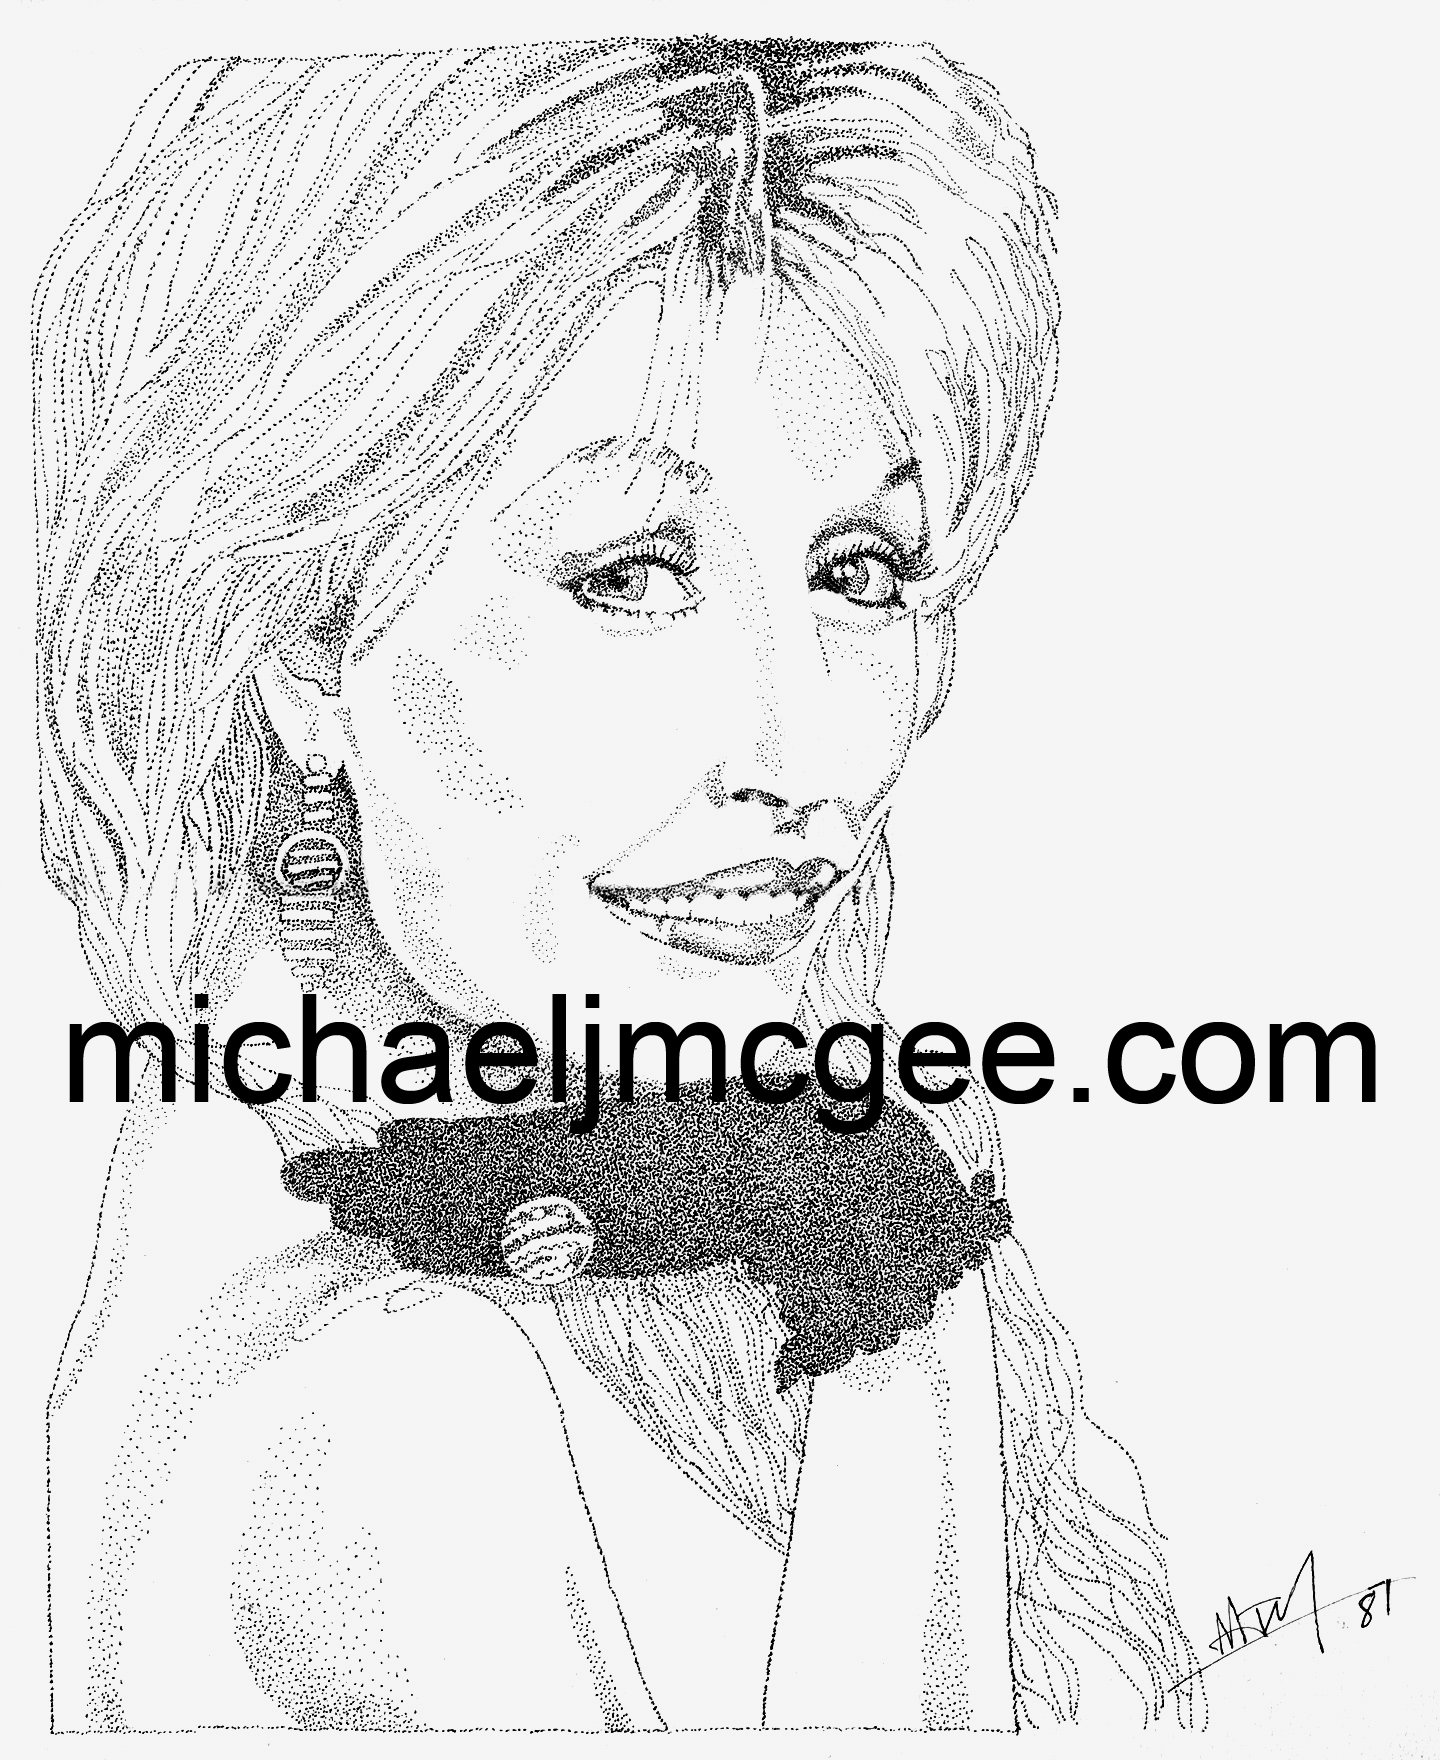 Dolly Parton / MJM Artworks / michaeljmcgee.com